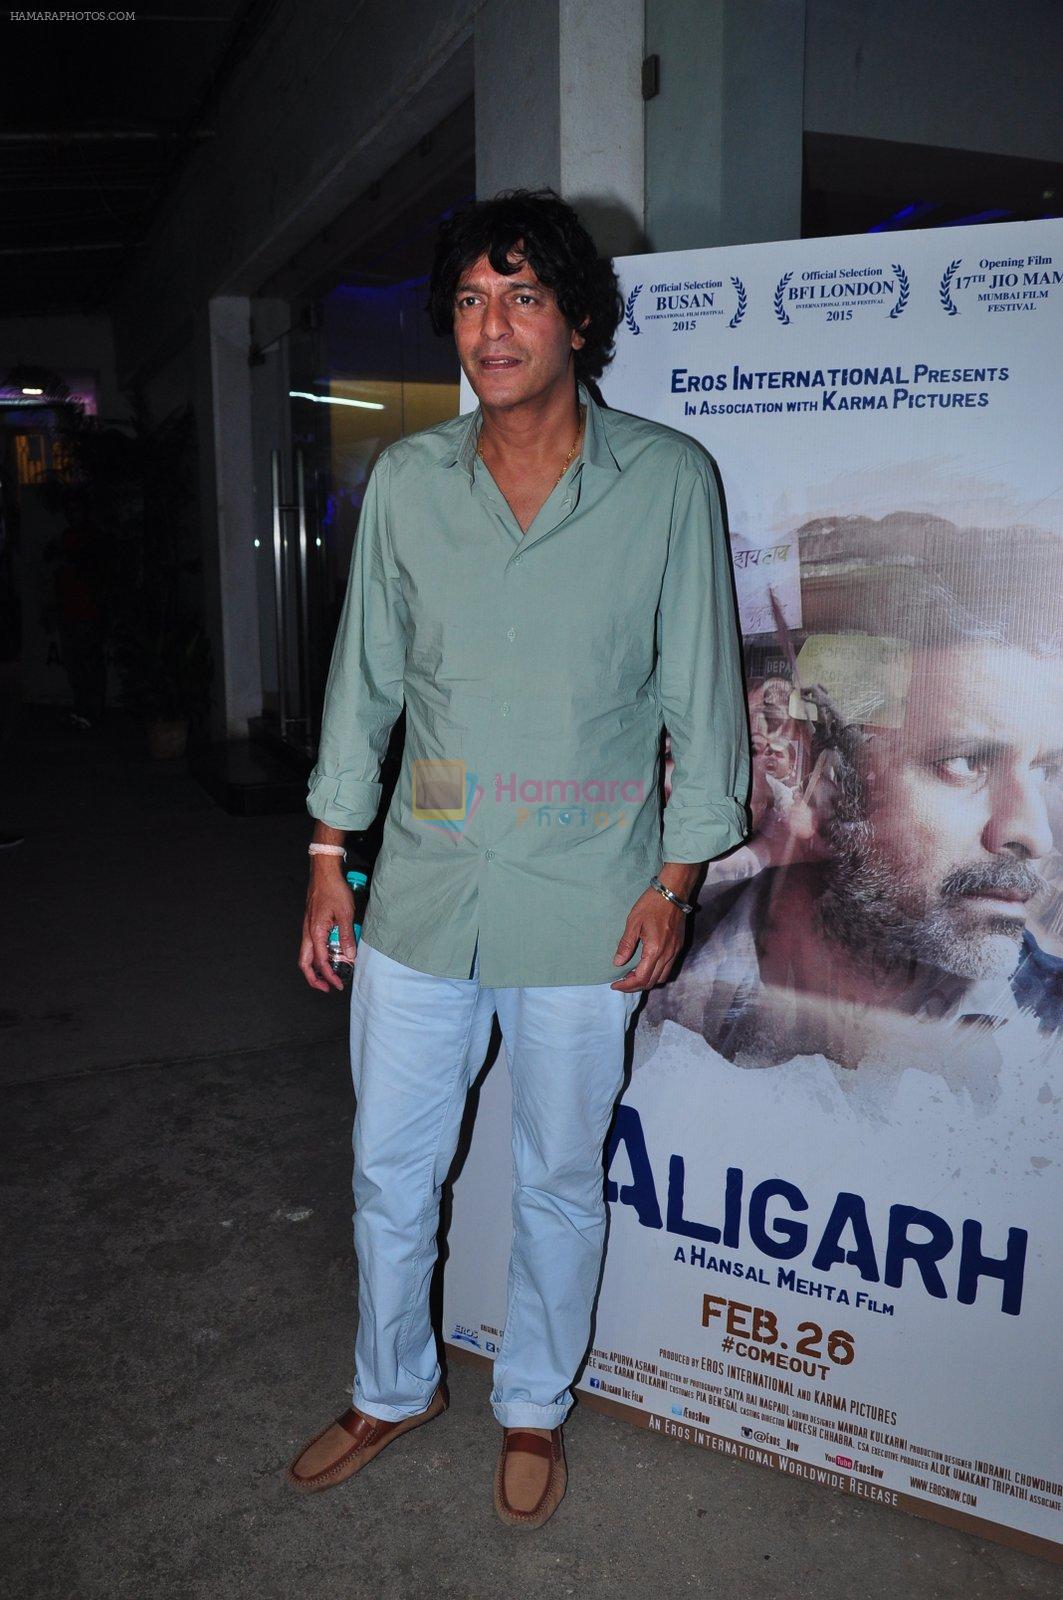 Chunky Pandey at Aligarh screening in Mumbai on 23rd Feb 2016